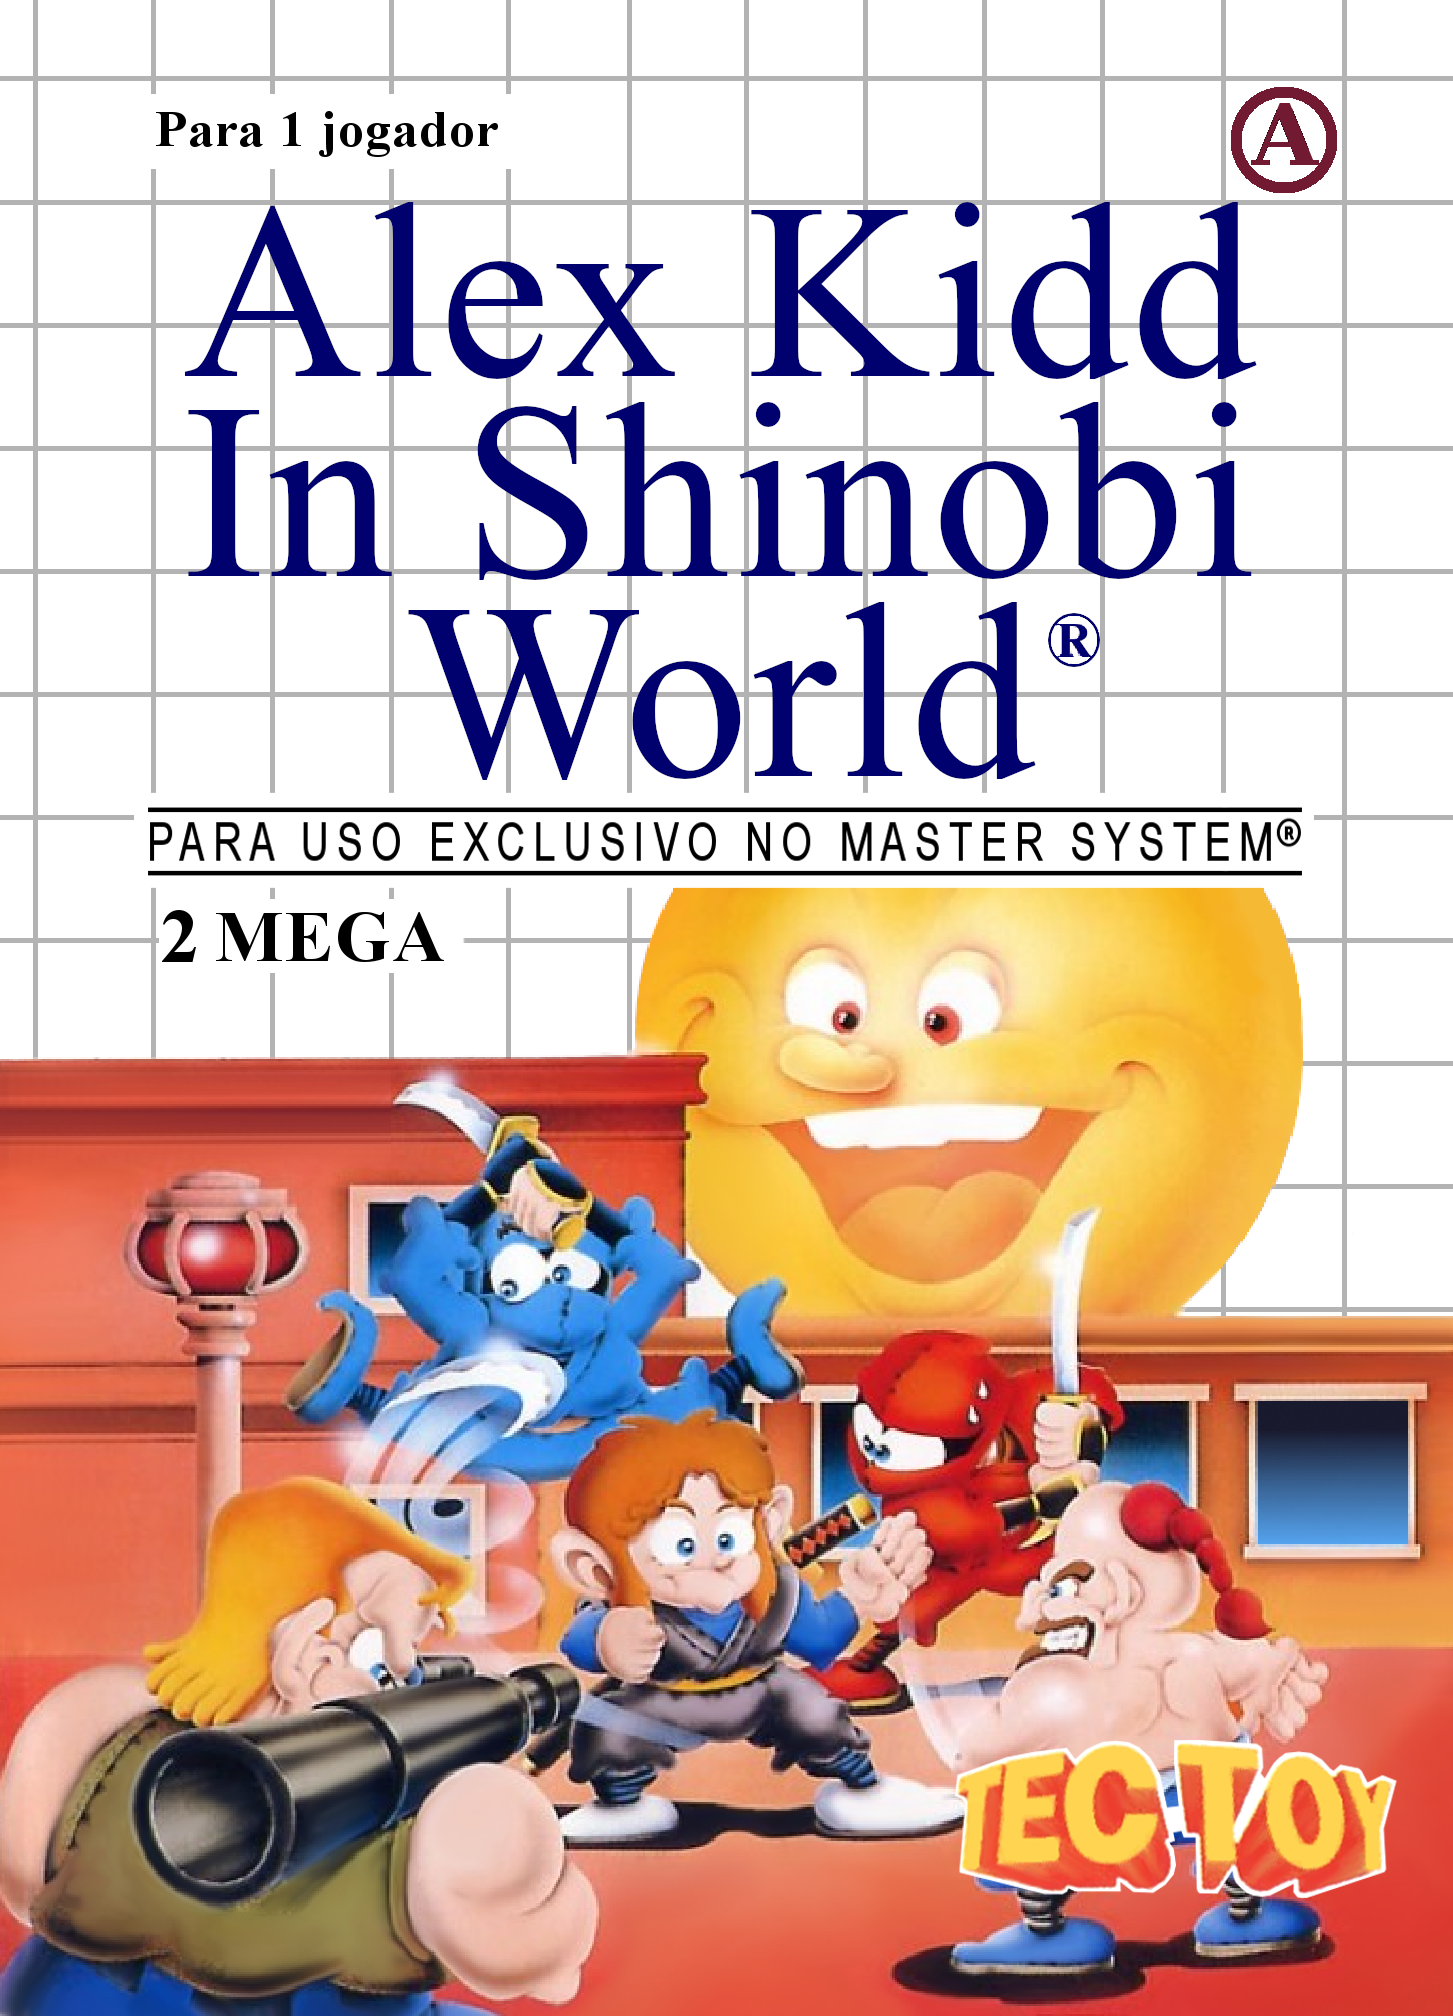 'Alex Kidd: in Shinobi World'